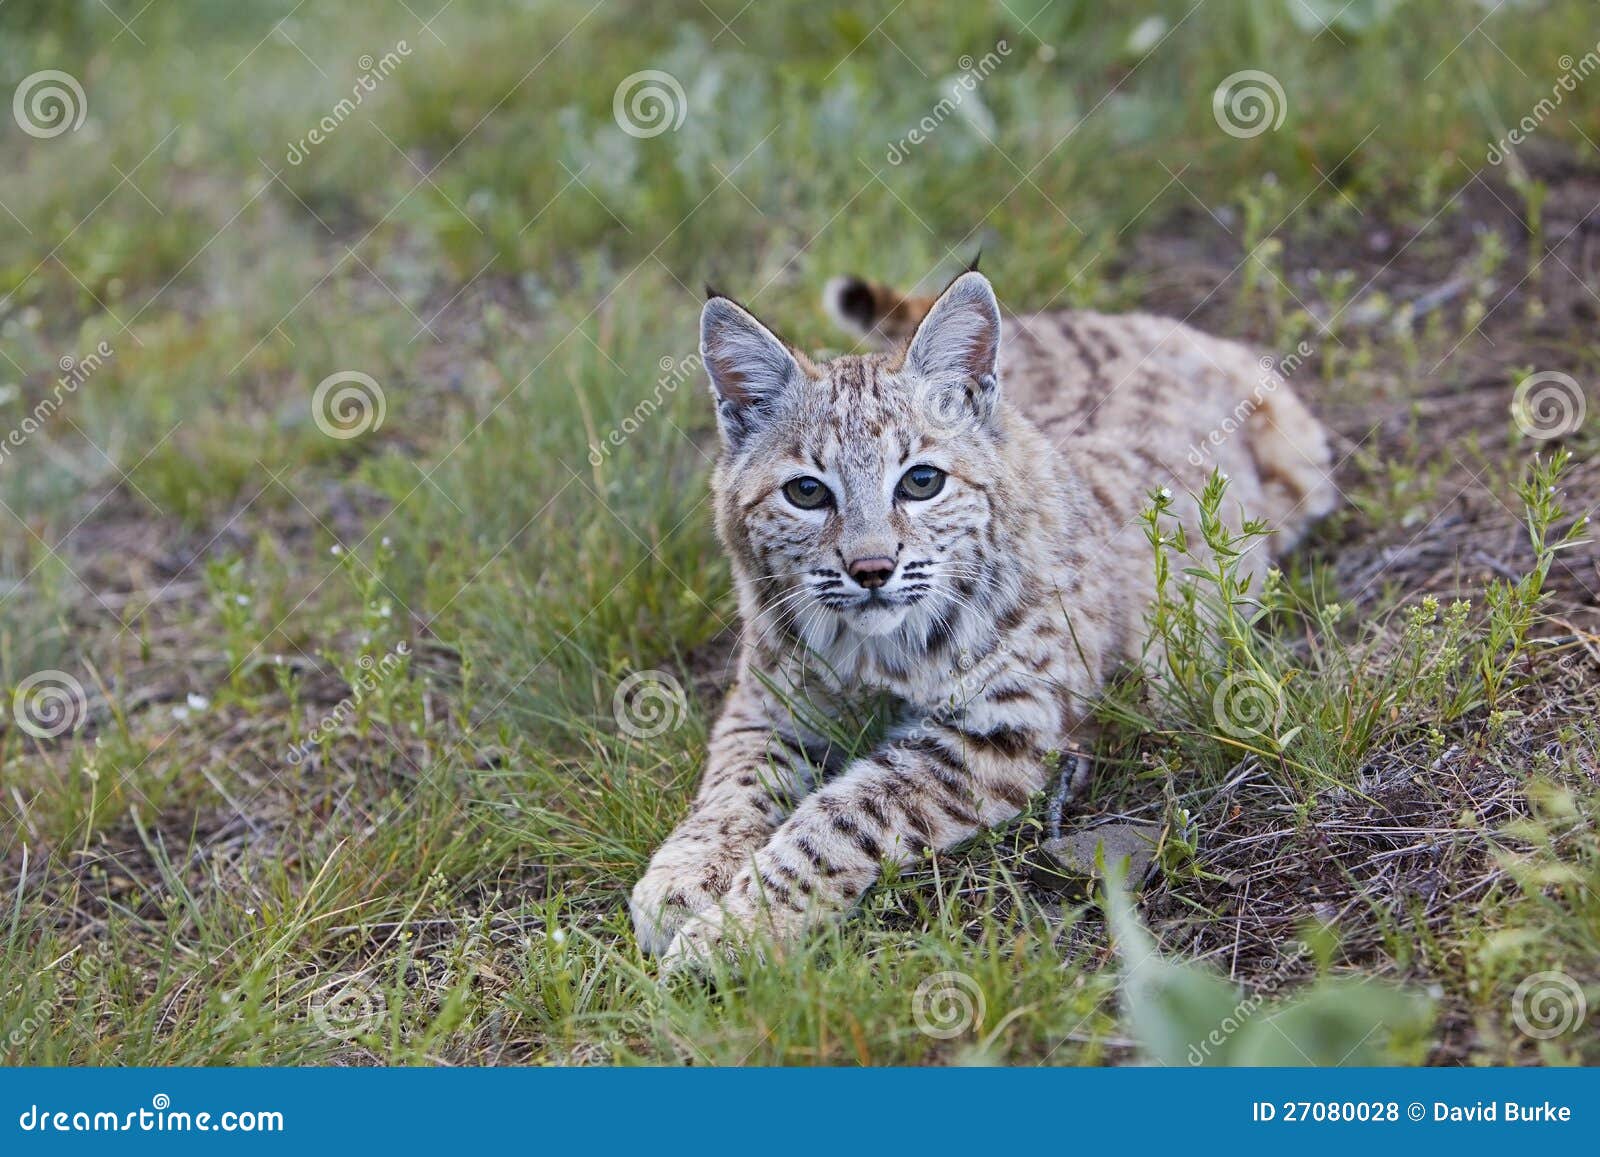 bobcat feline lynx cat animal wildlife grass